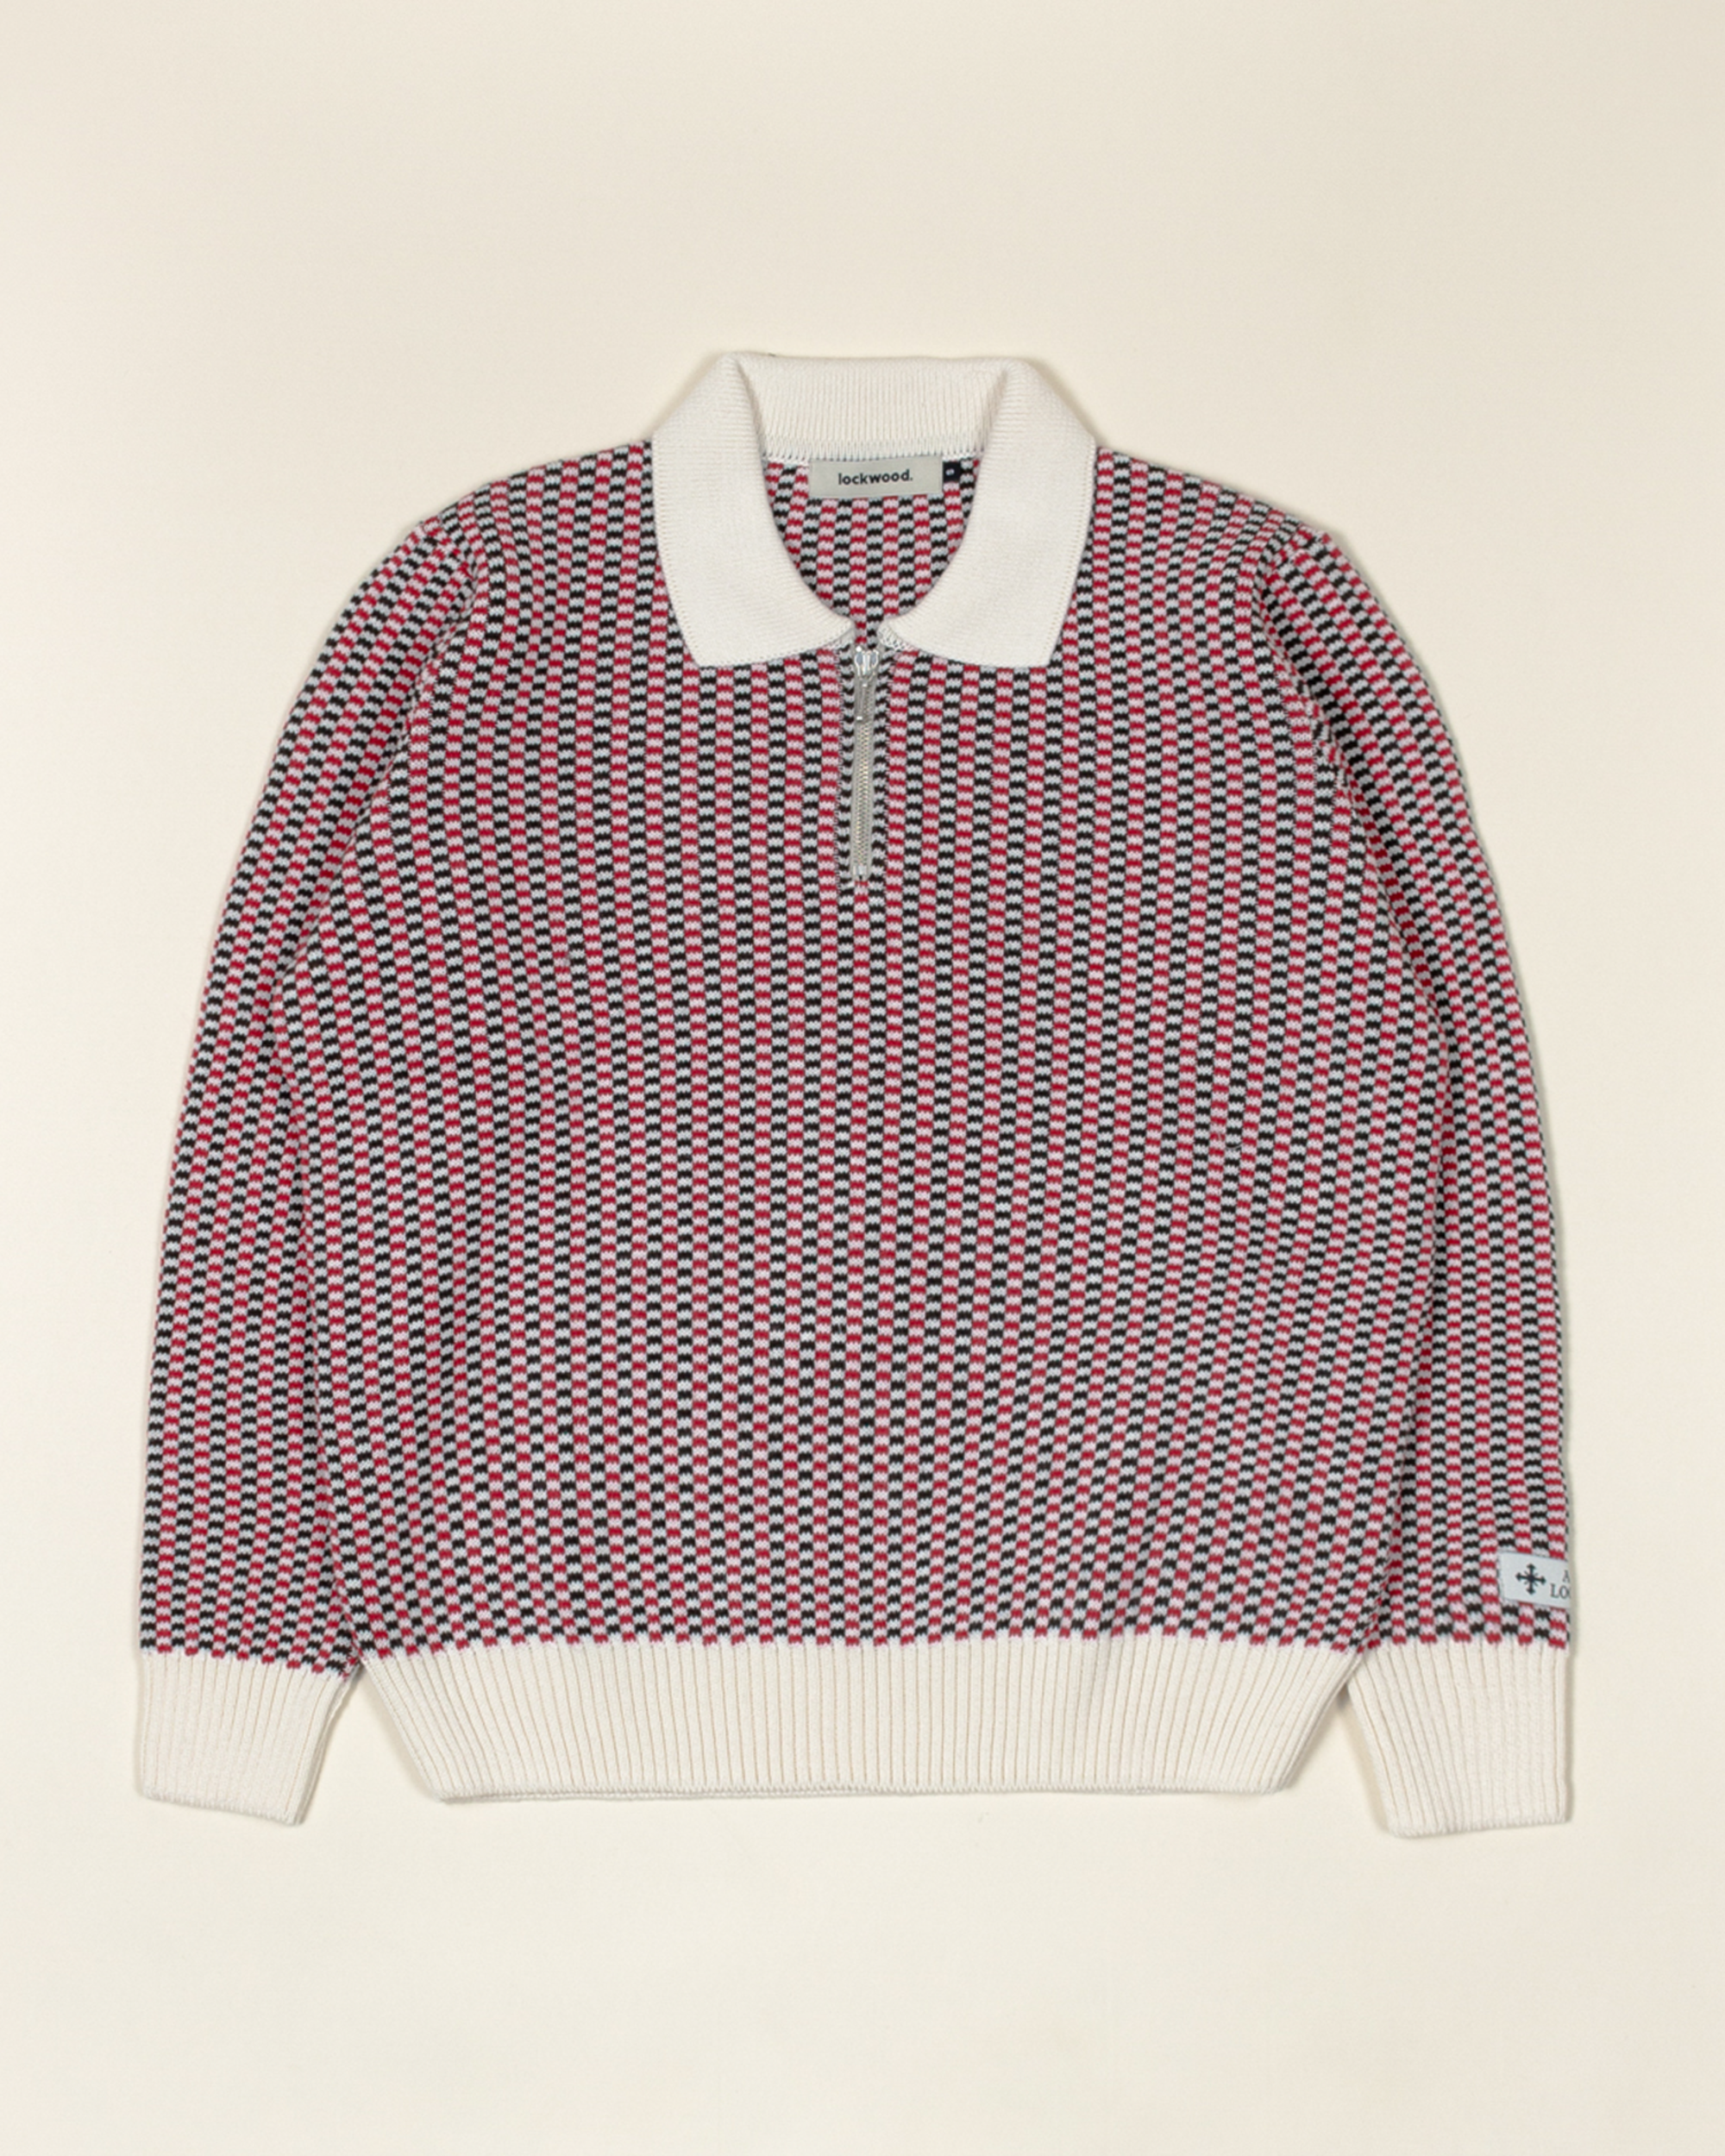 Lockwood Knitted Checkered Half-Zip - Brown/ Off-White/ Dark Red